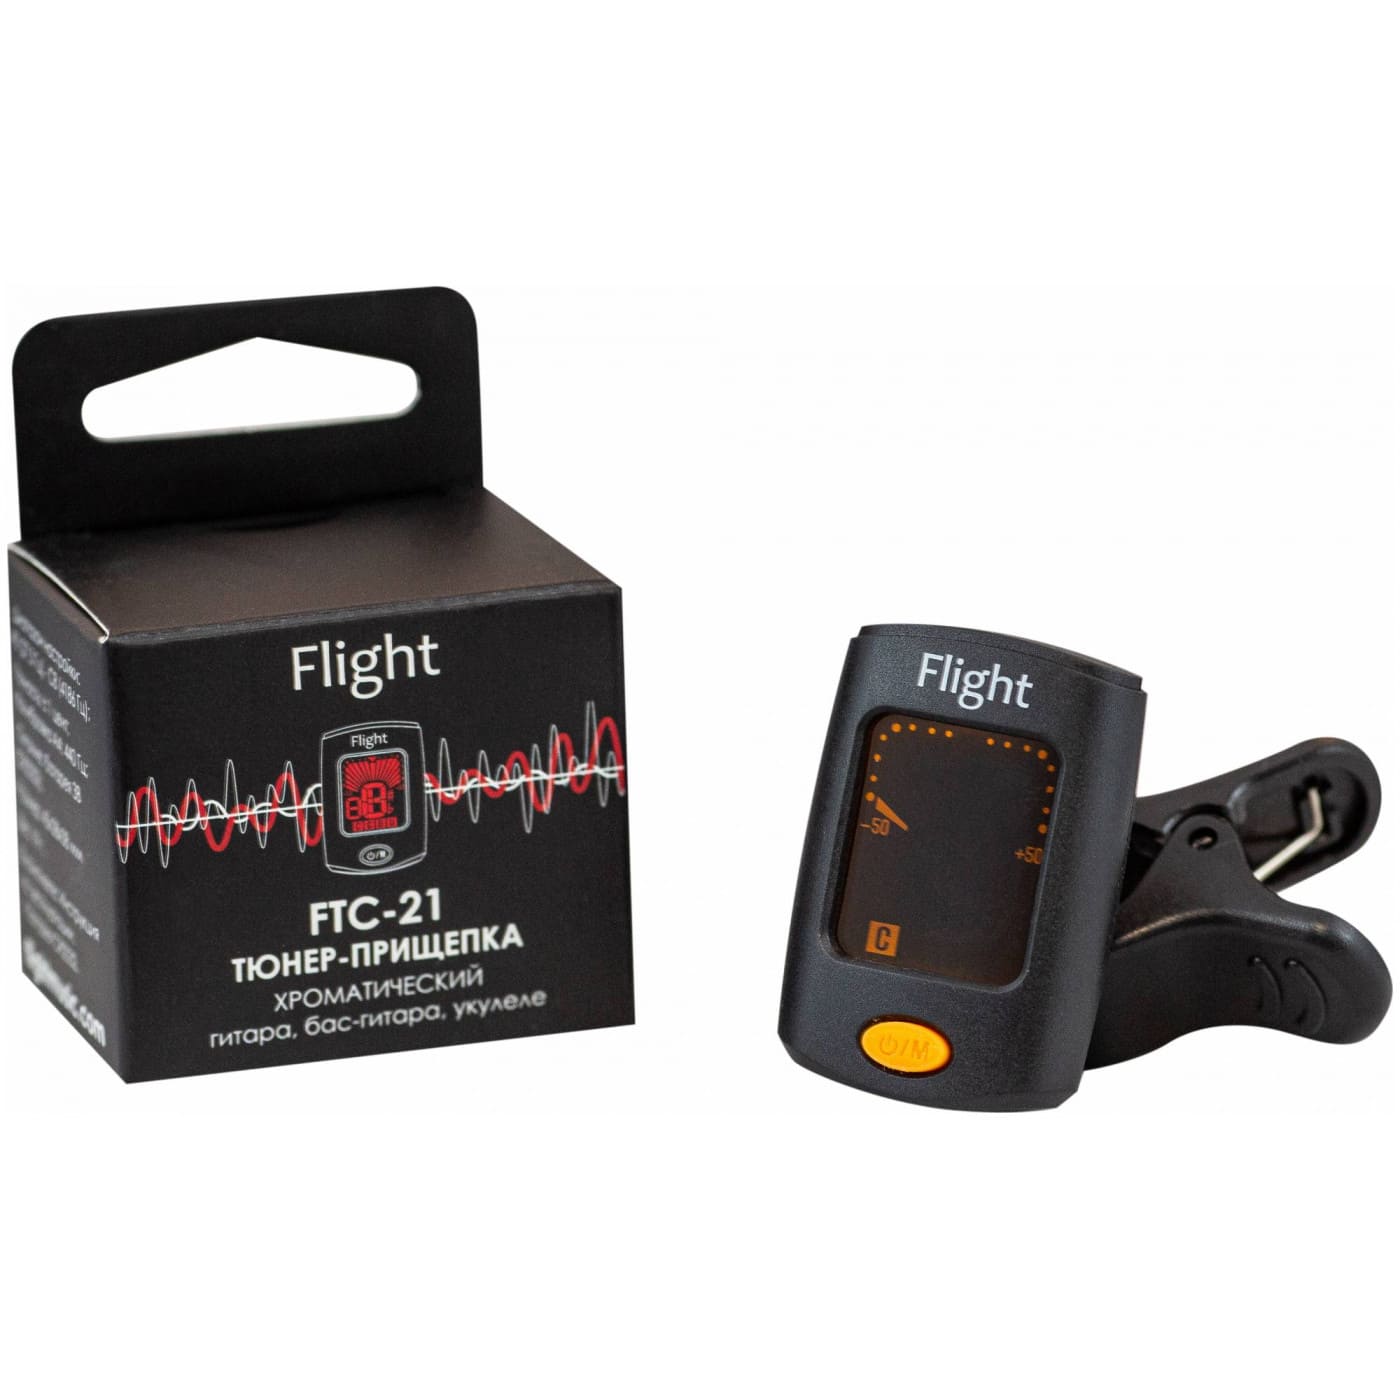 FLIGHT FTC-21 - Хроматический тюнер-прищепка